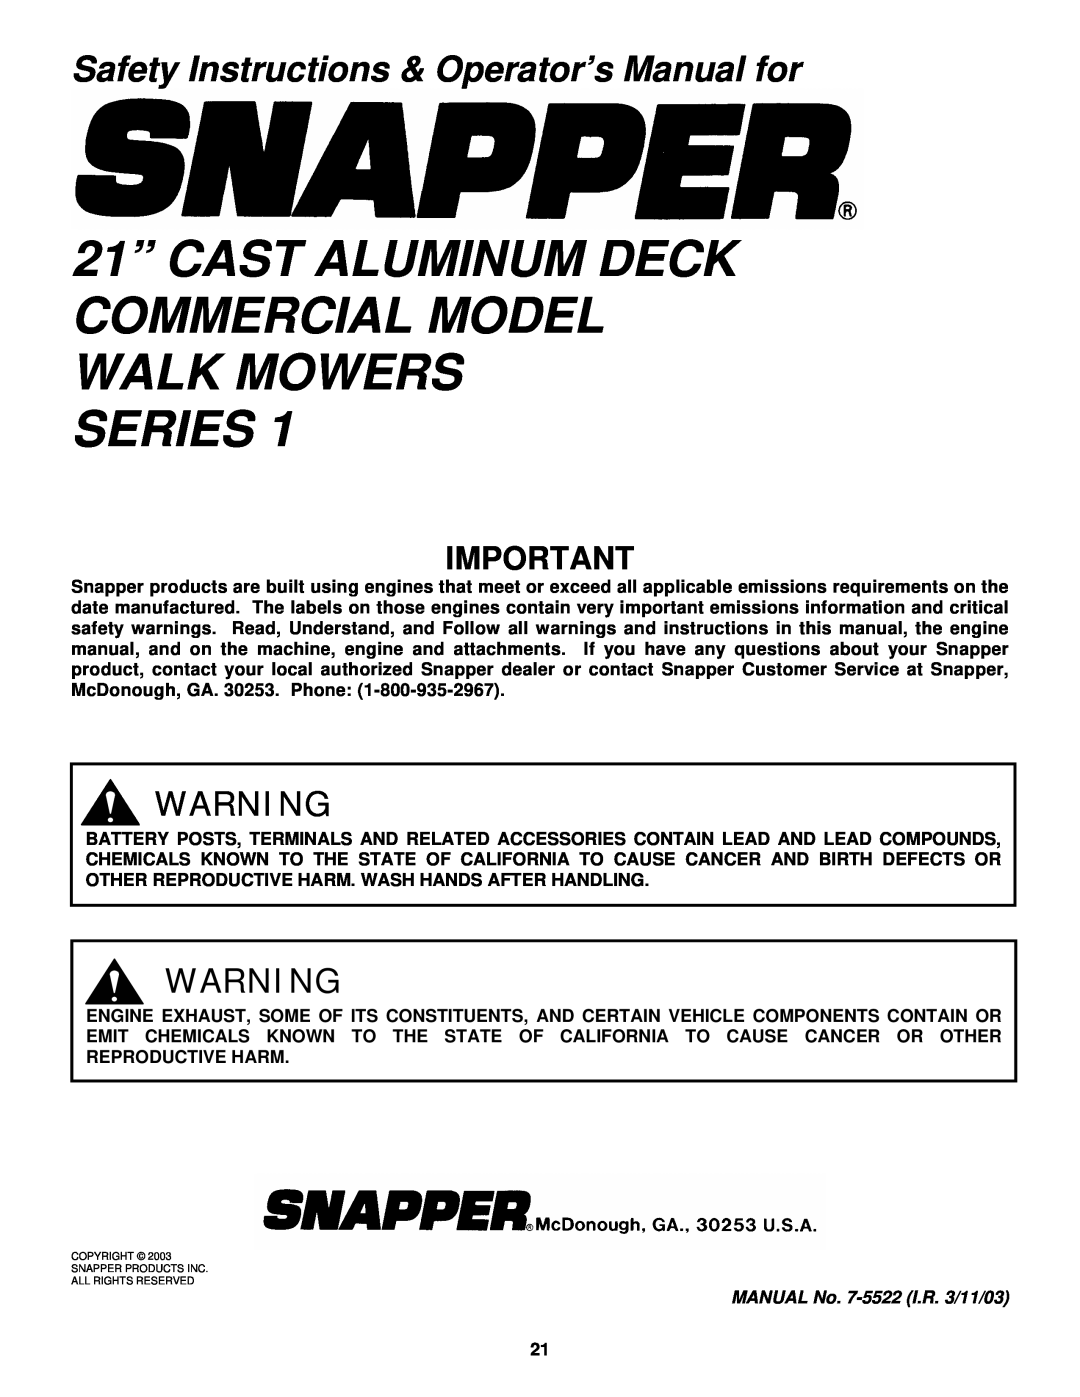 Snapper ECLP21 551HV important safety instructions 21” CAST ALUMINUM DECK COMMERCIAL MODEL WALK MOWERS SERIES 